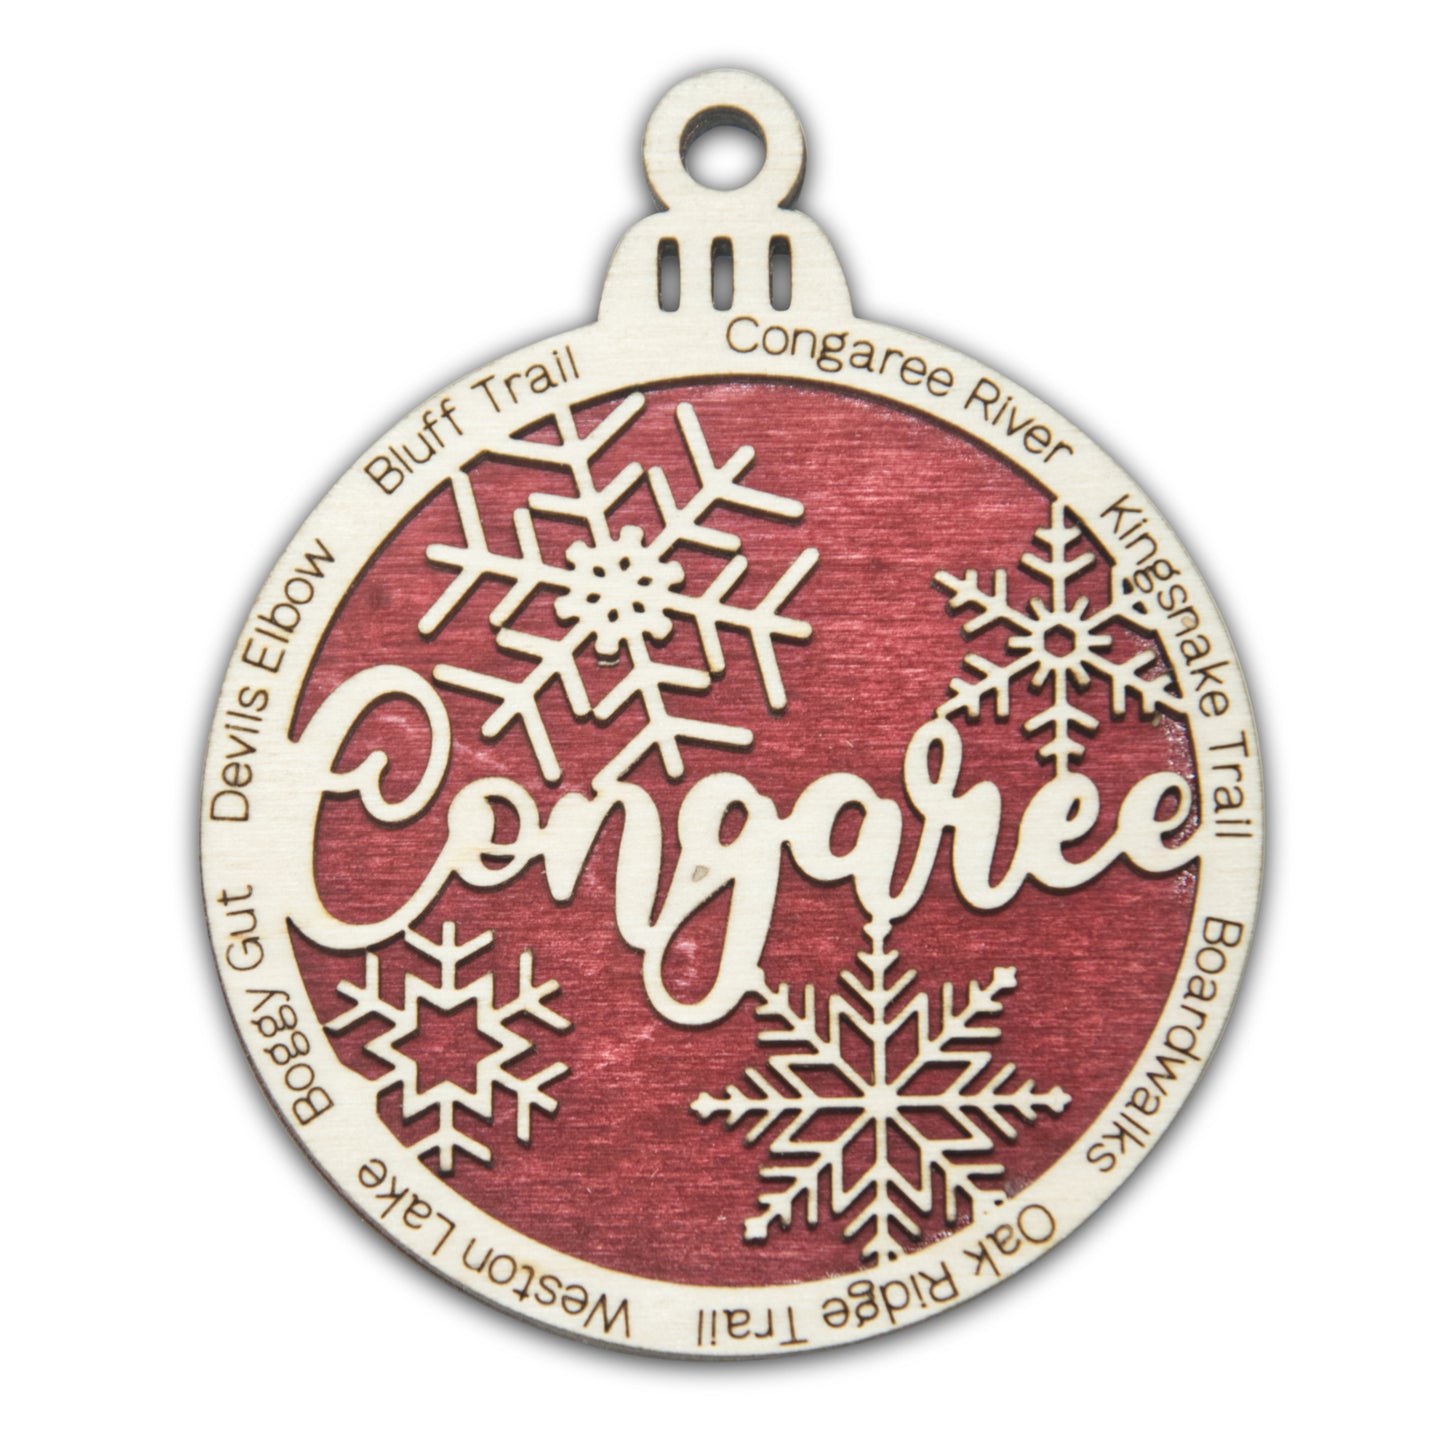 Congaree National Park Christmas Ornament